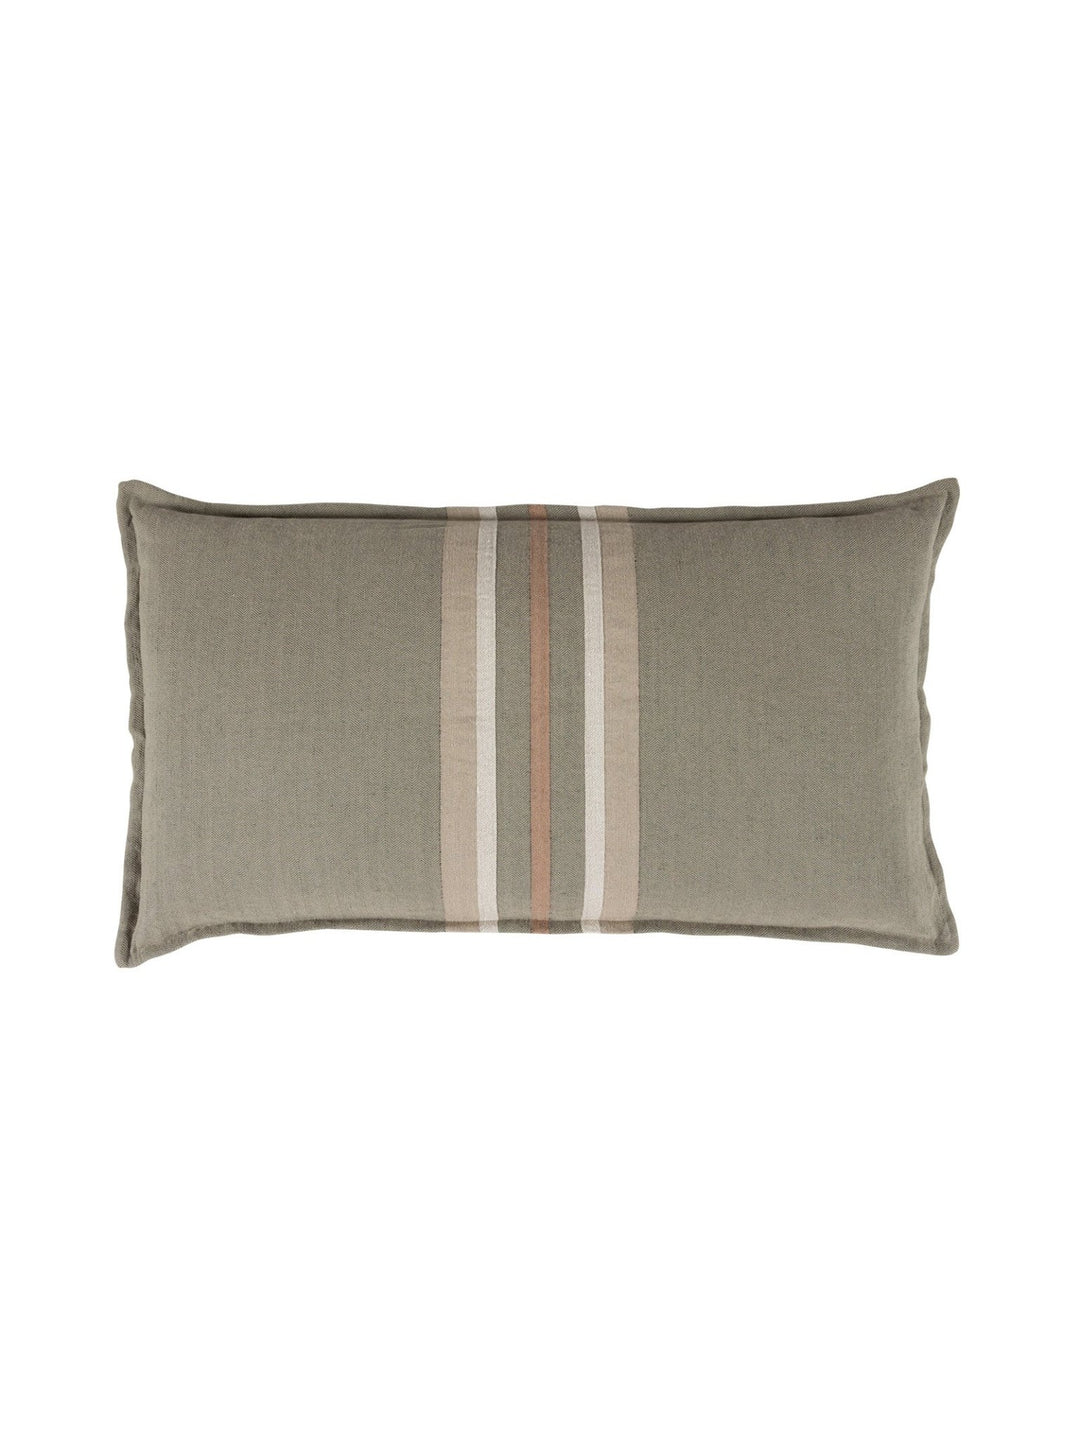 Sicily Pillowcase Set of 2 in Caledon - pillowcase - Hertex Haus - bed & bath